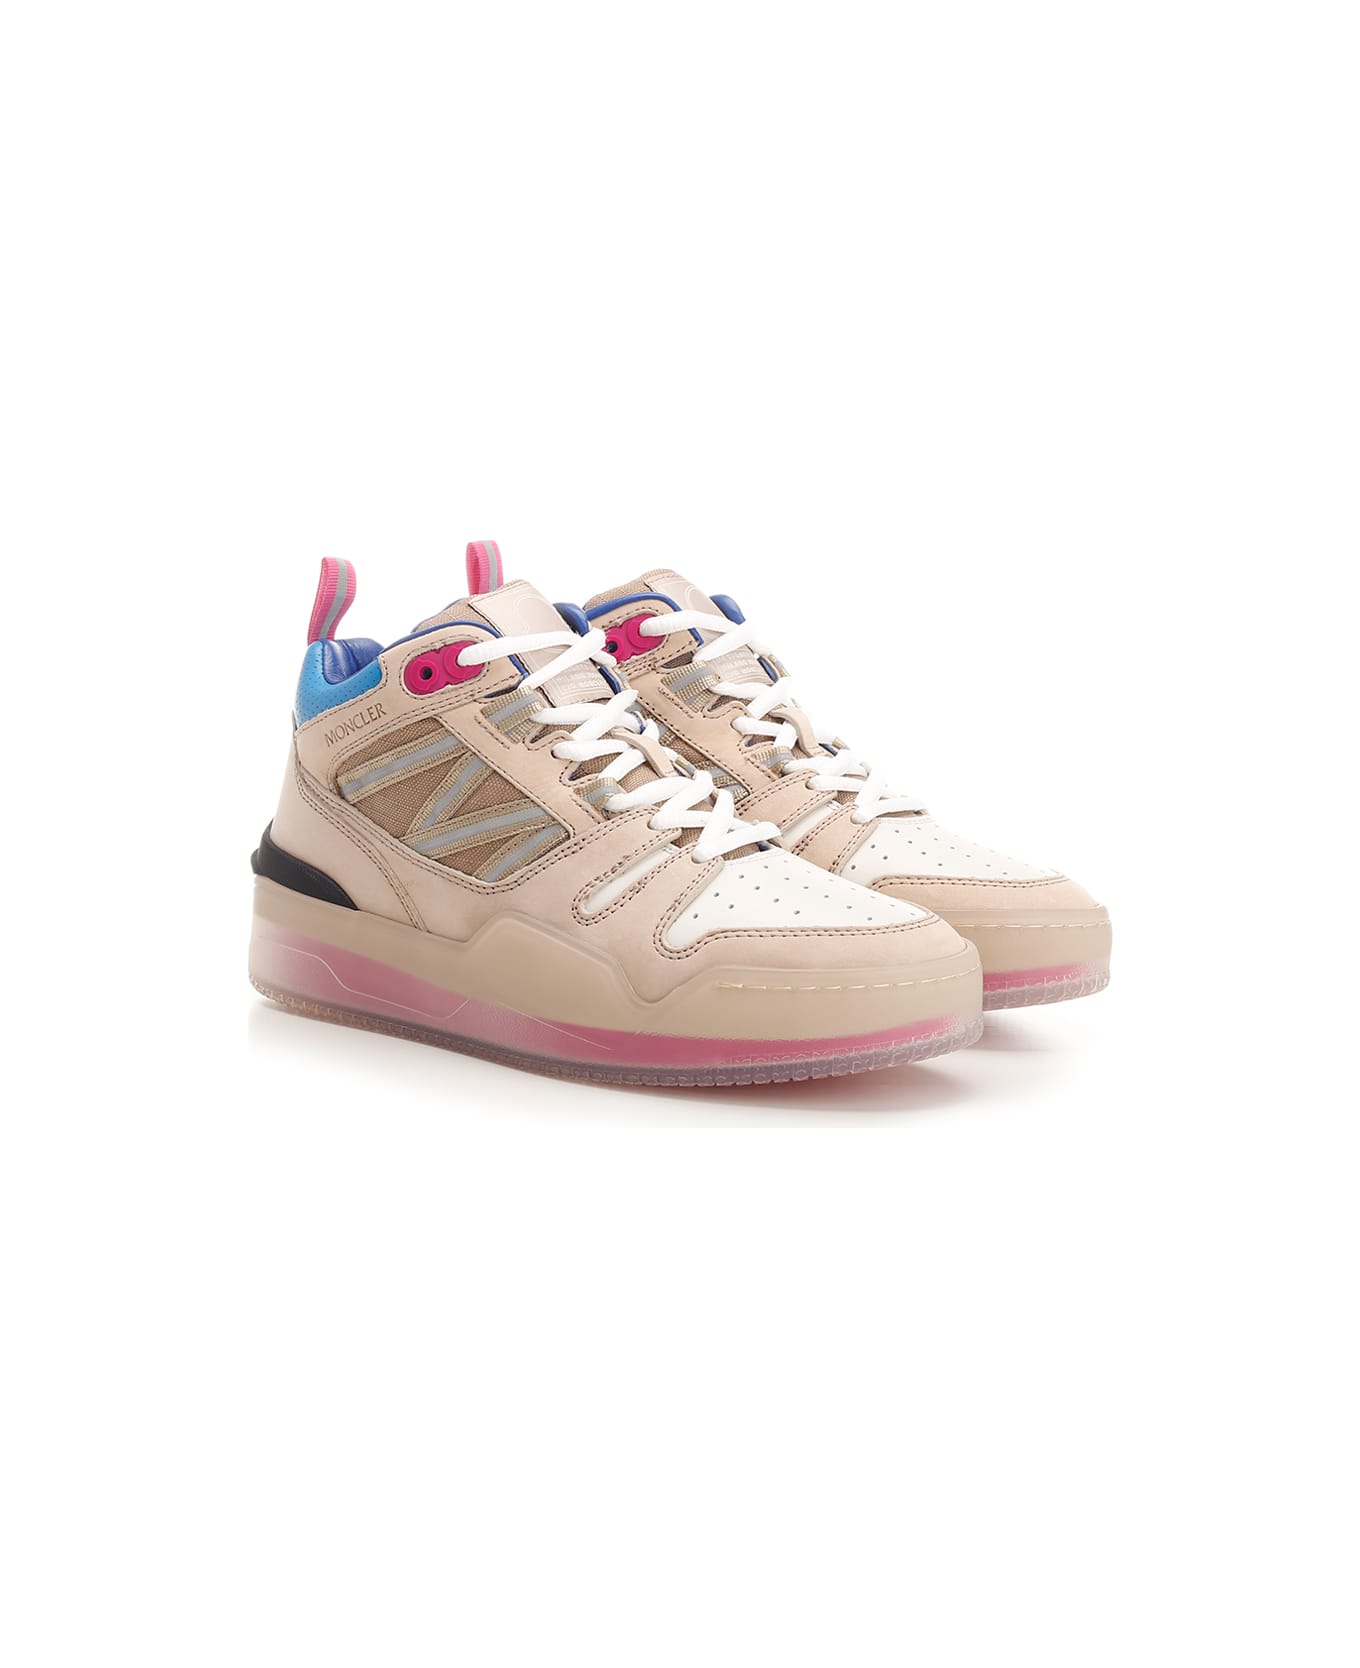 Moncler 'pivot' High Top Sneakers - Pink